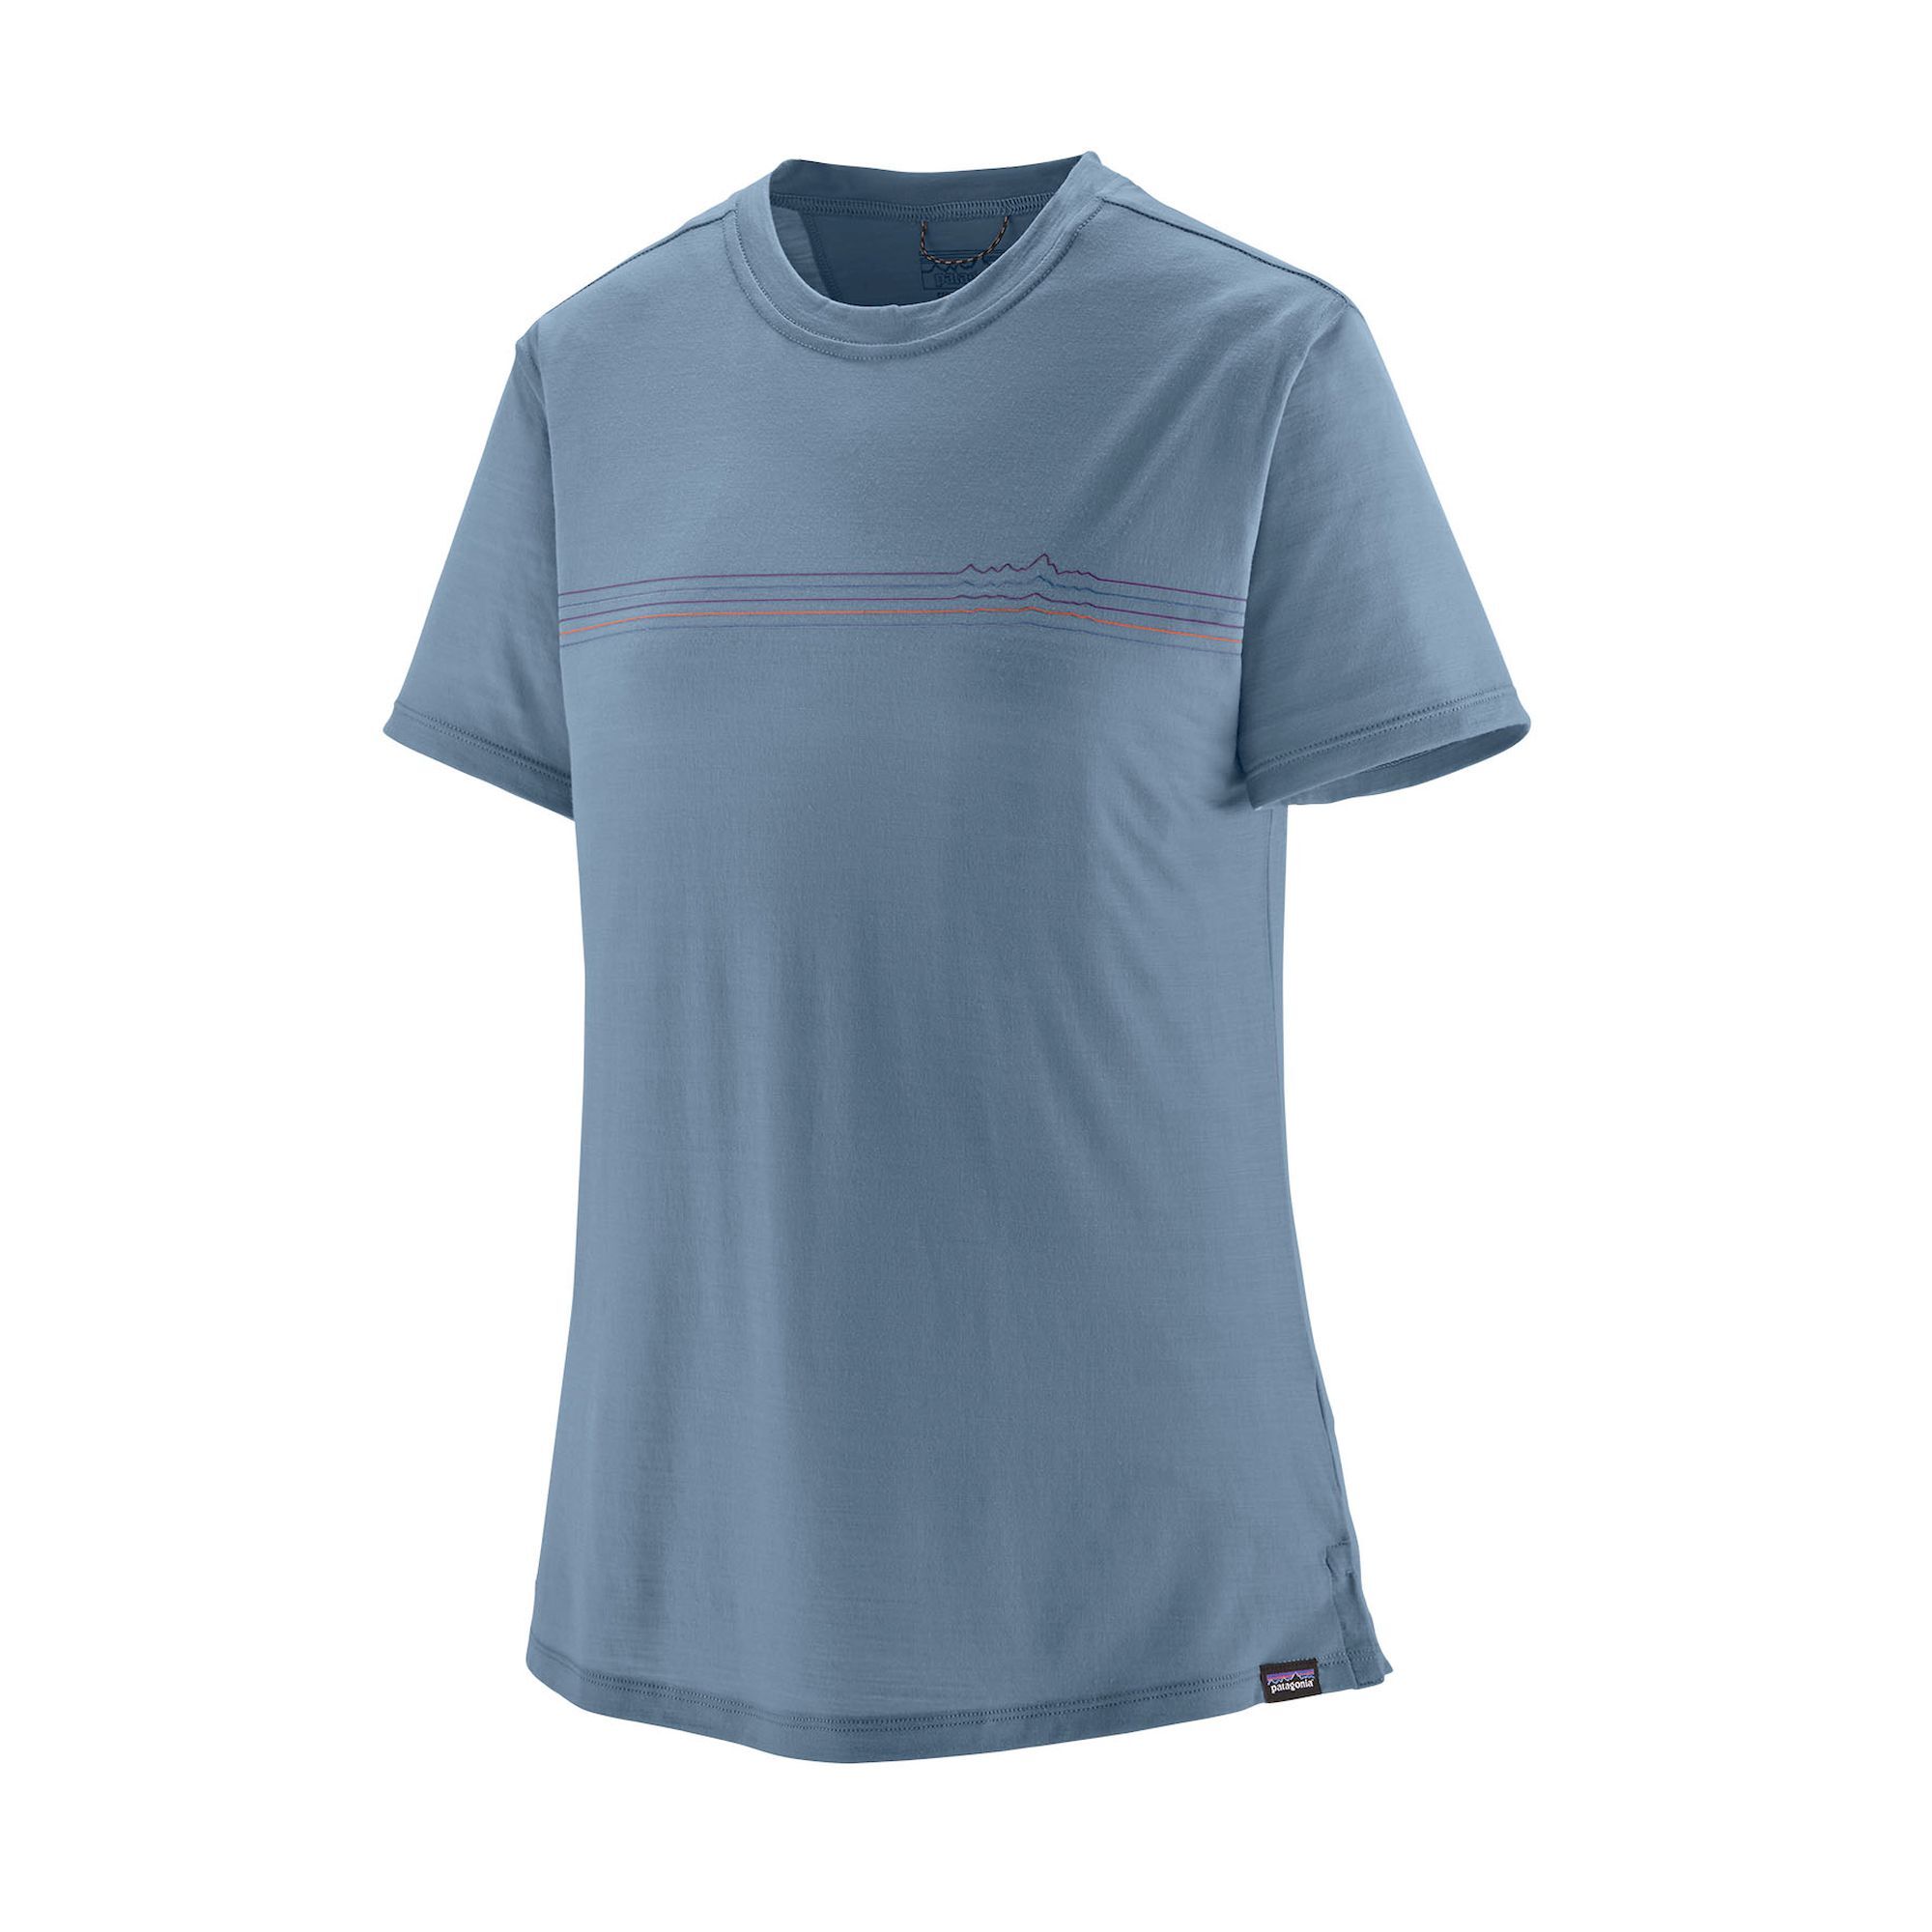 Patagonia Cap Cool Merino Graphic Shirt - T-shirt - Women's